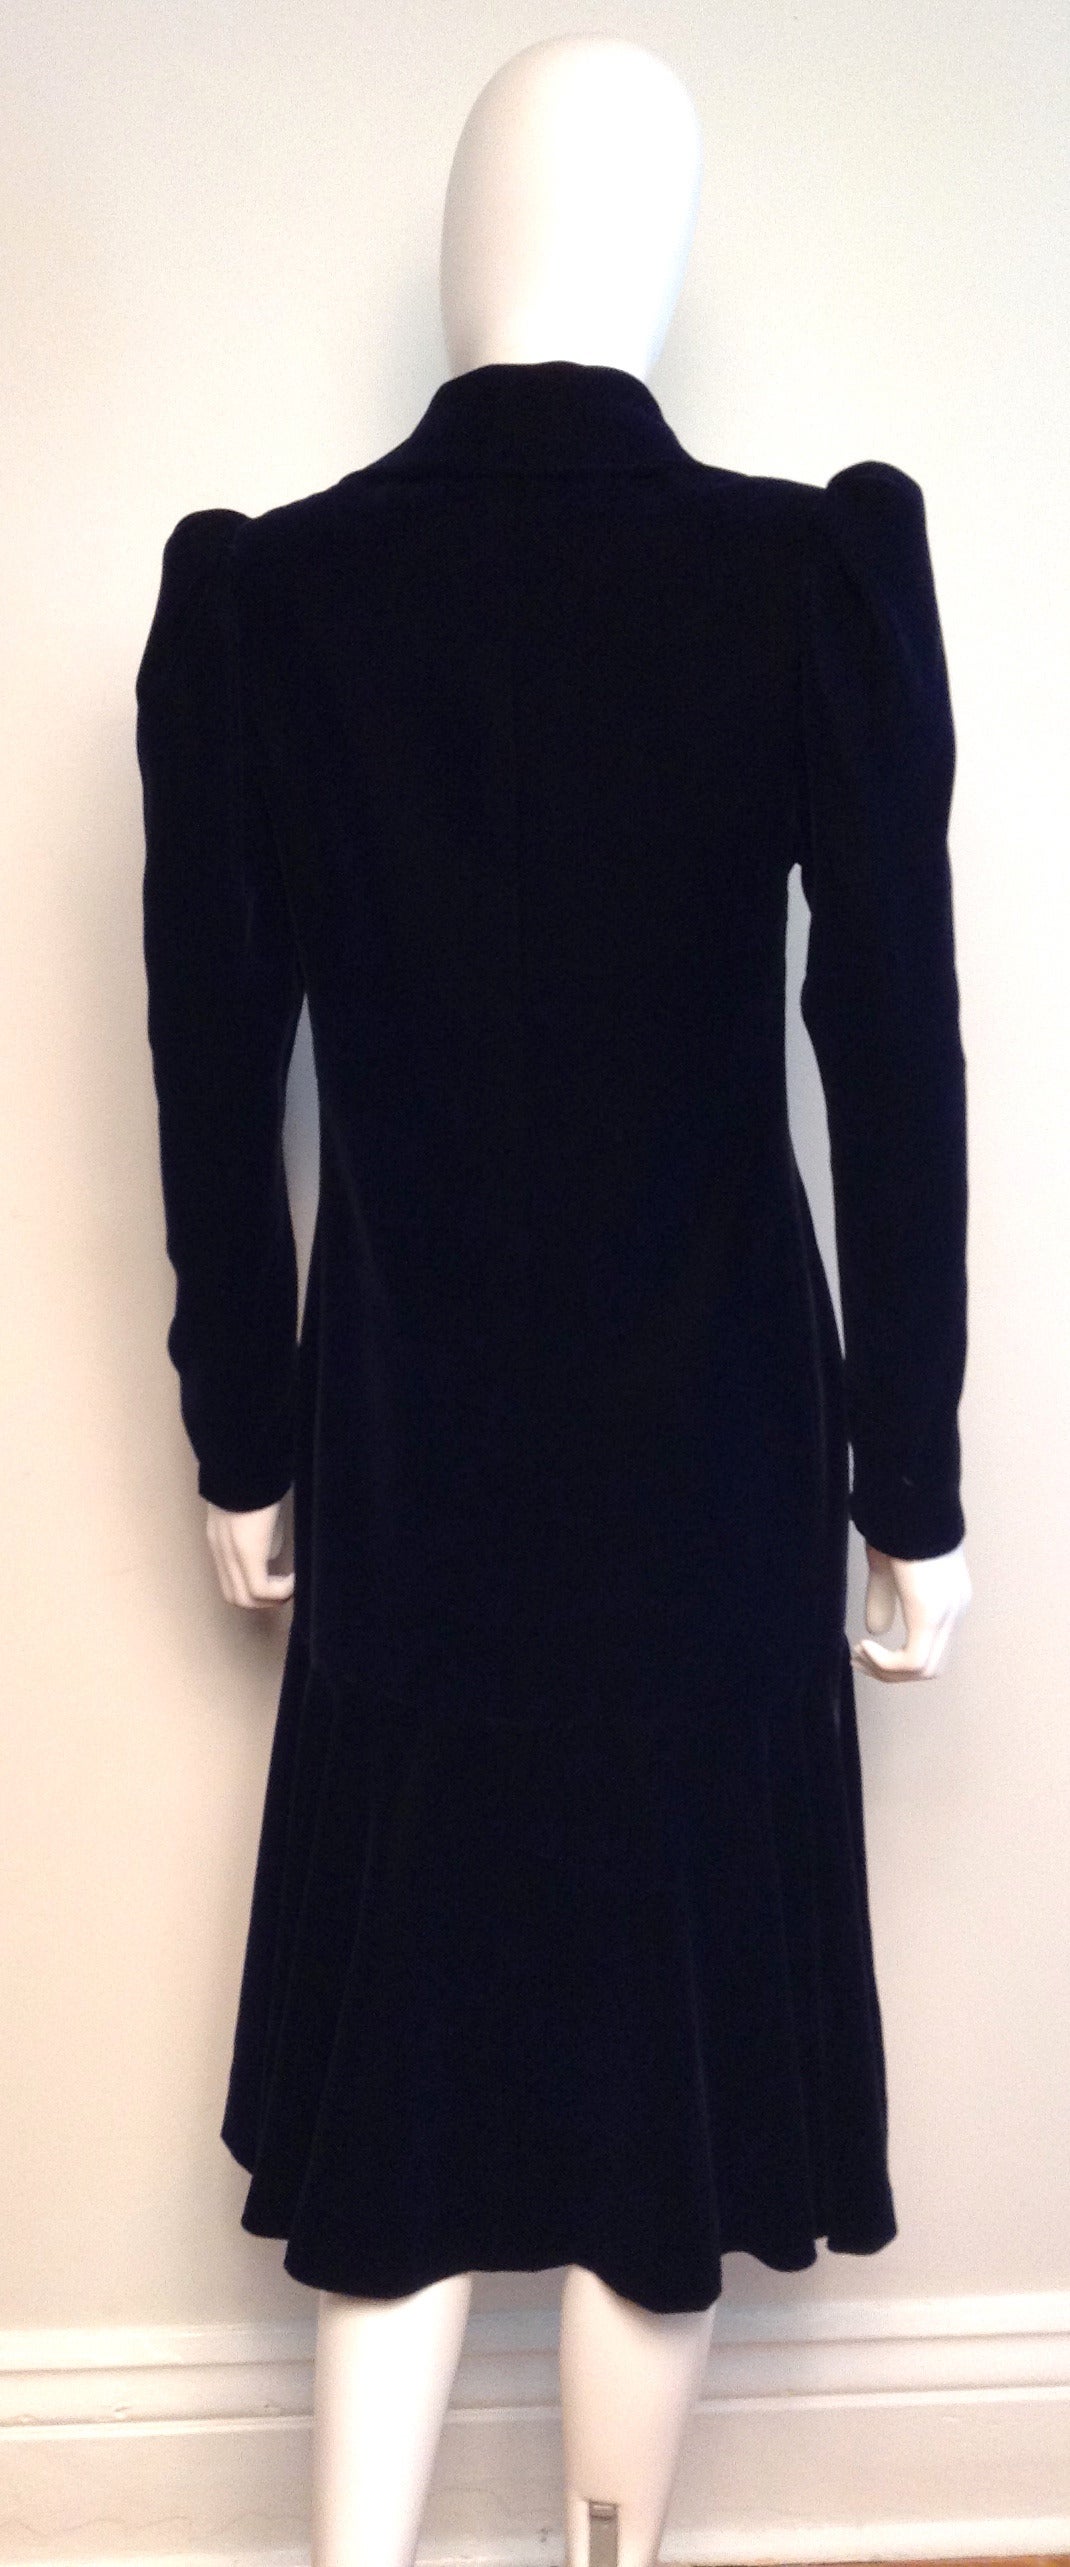 Saint Laurent Vintage Deep Blue Velvet Drop Waist Dress Size 38/6 In Good Condition For Sale In Toronto, Ontario